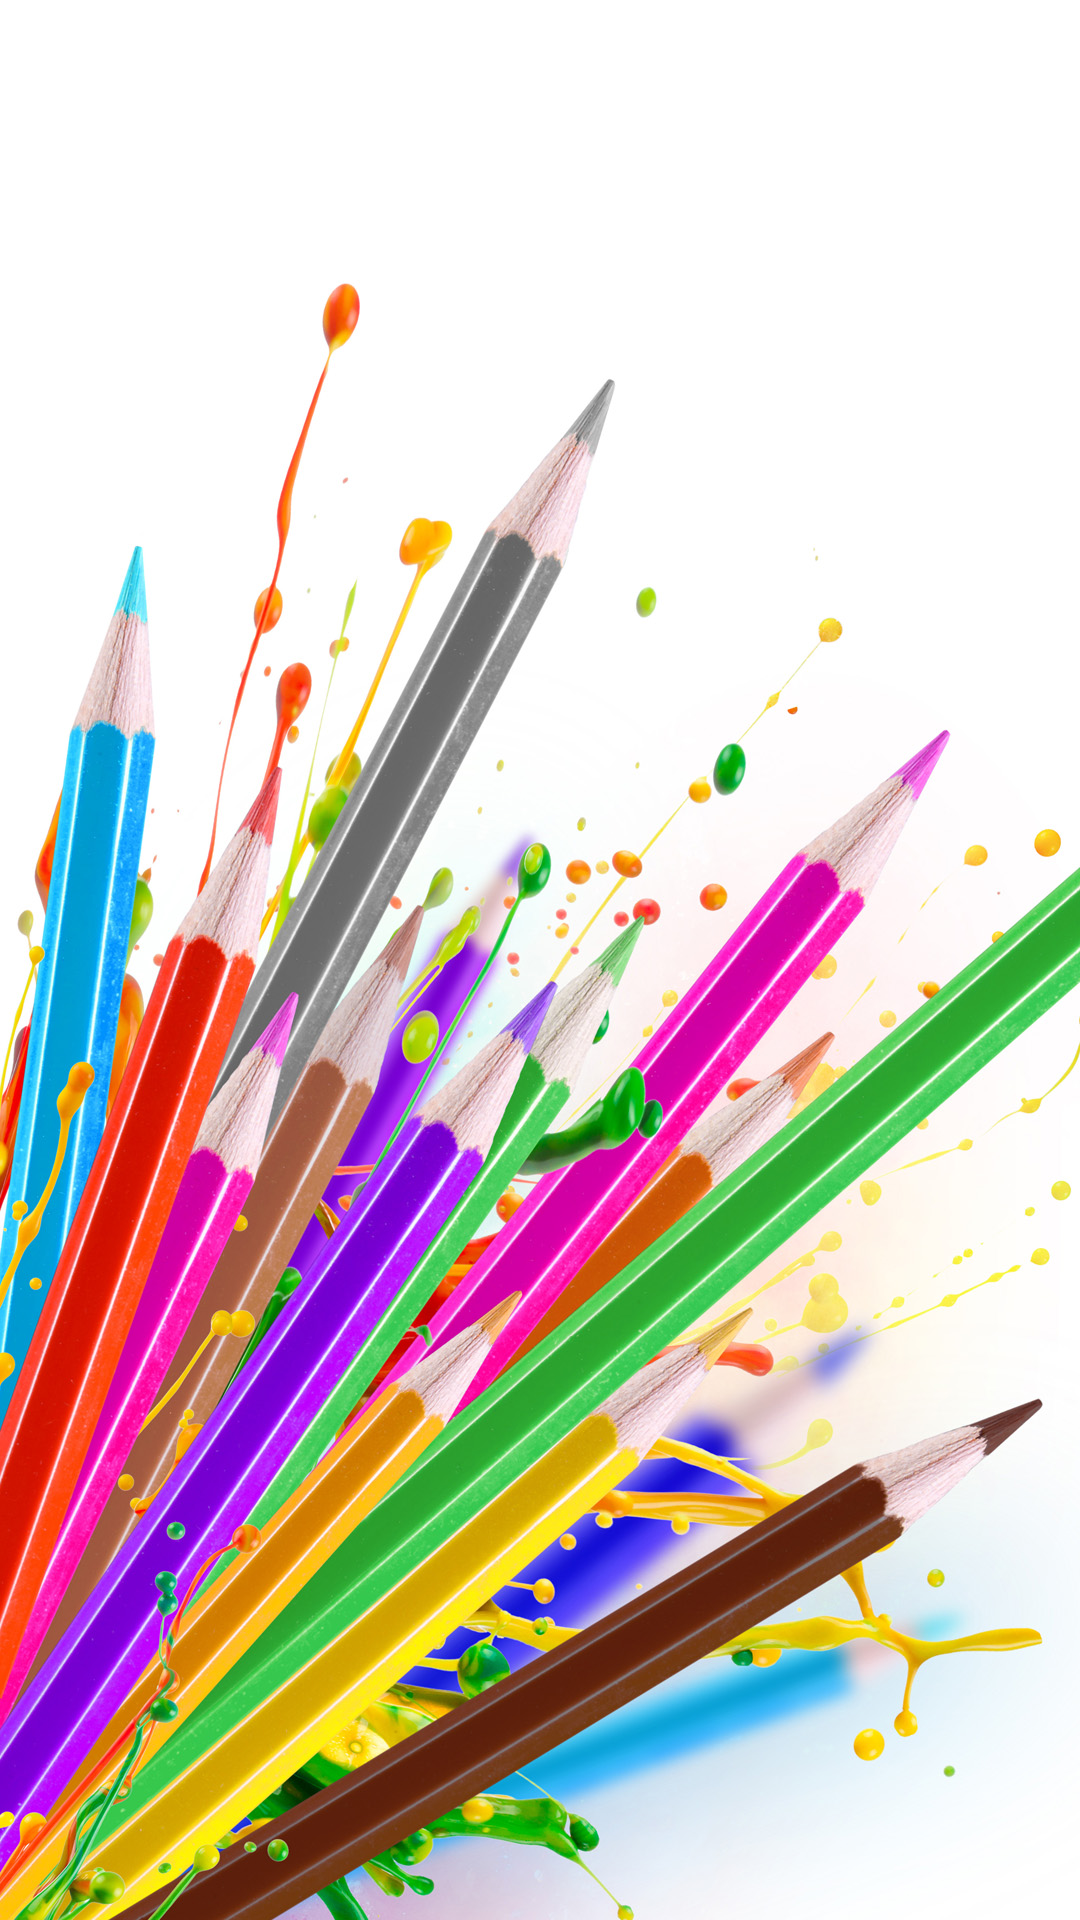 4000 Free Pencil  School Images  Pixabay